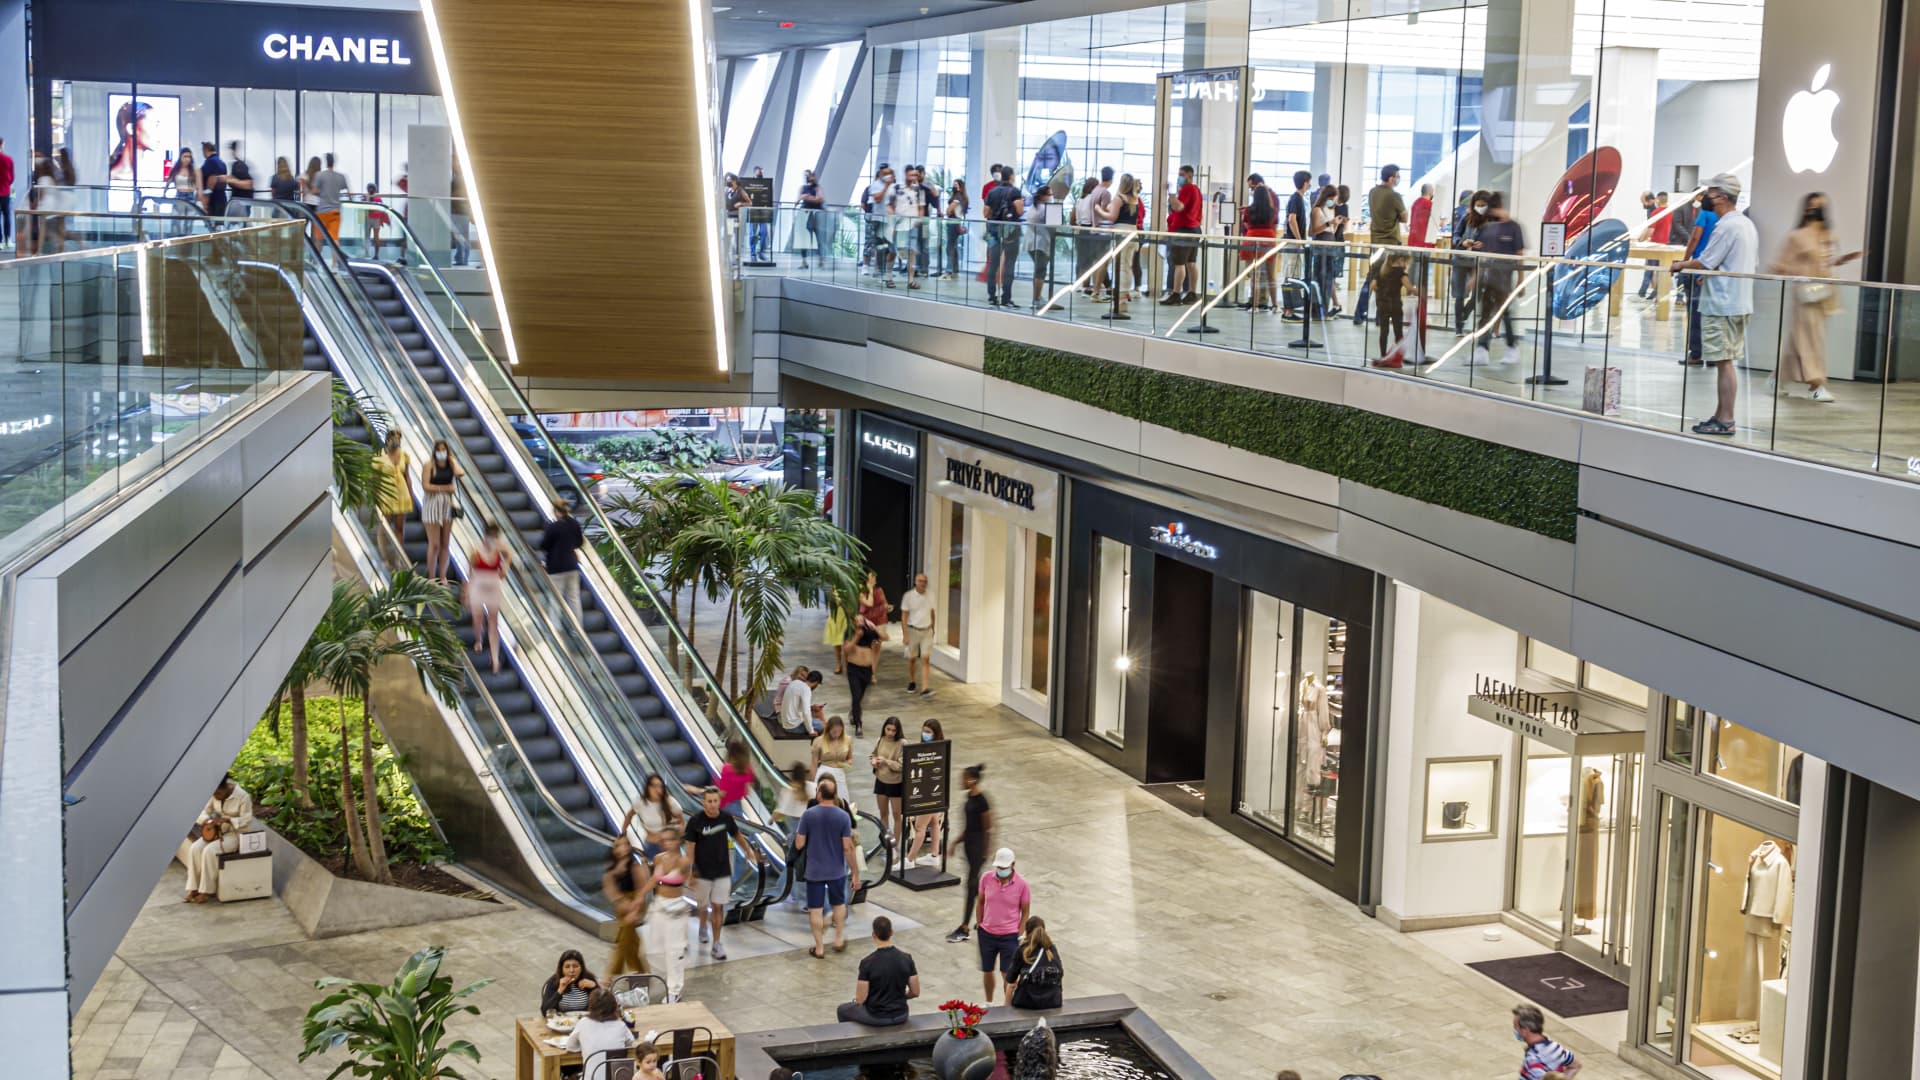 Miami, Florida, Brickell City Centre shopping mall with Apple Store, Chanel and escalators.